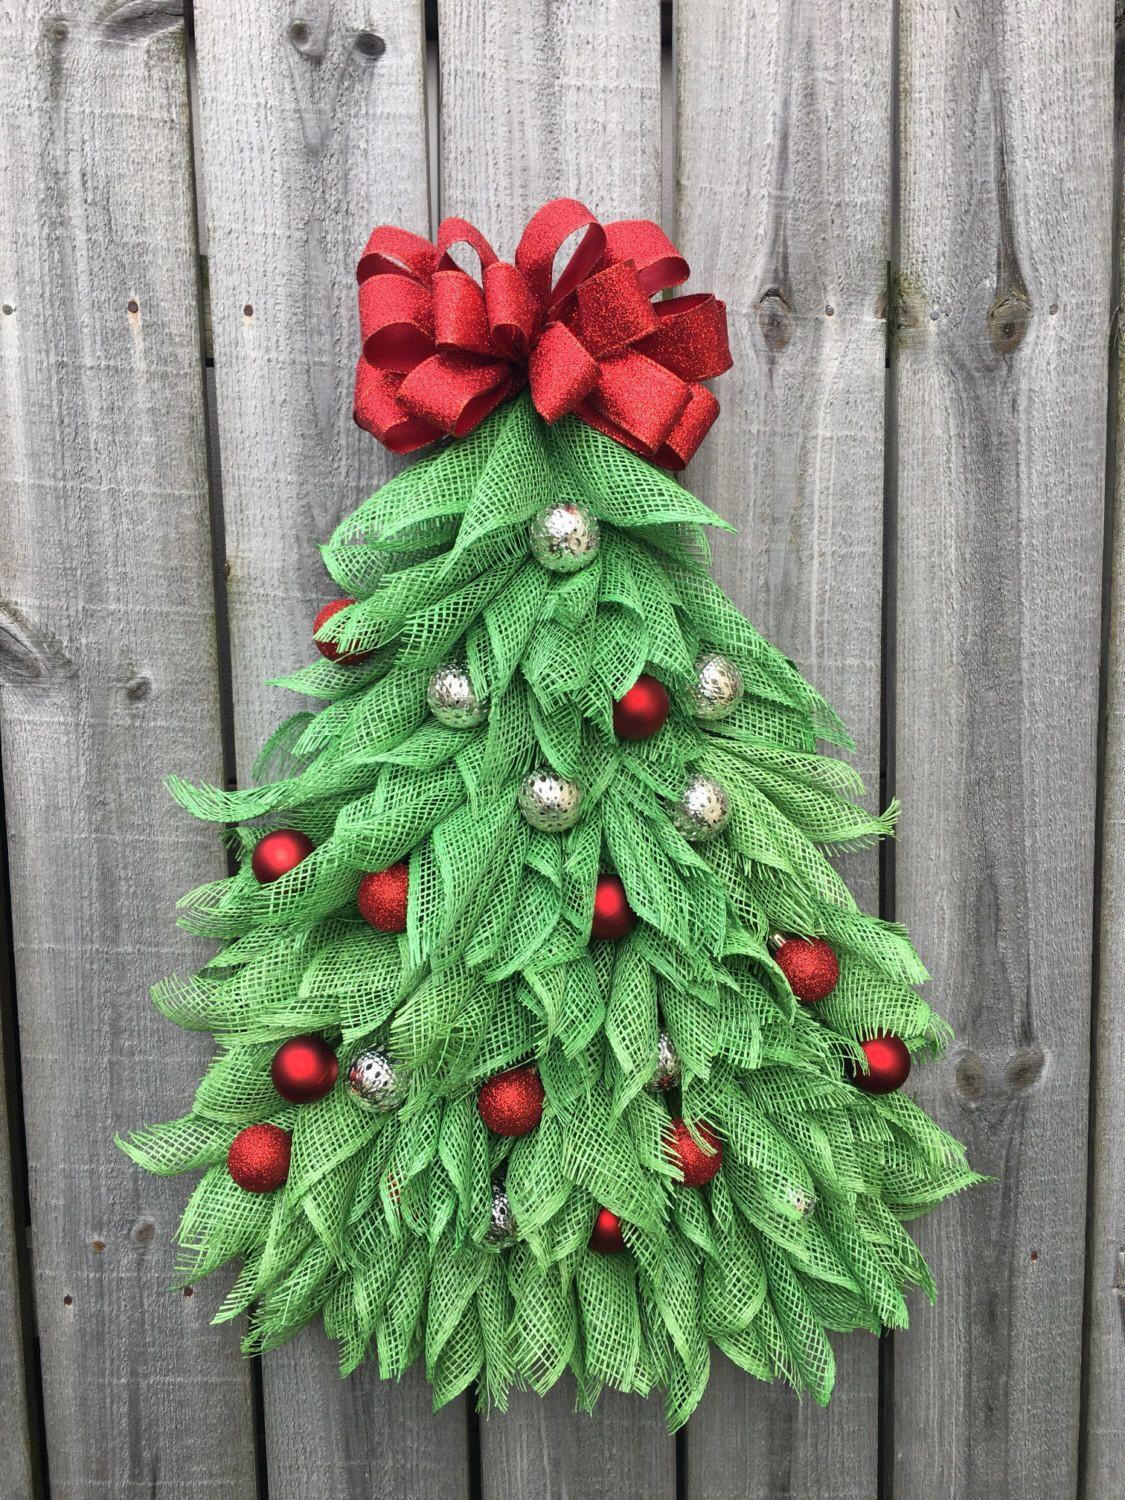 DIY Christmas Wreath Pinterest
 Best 25 Christmas tree wreath ideas on Pinterest